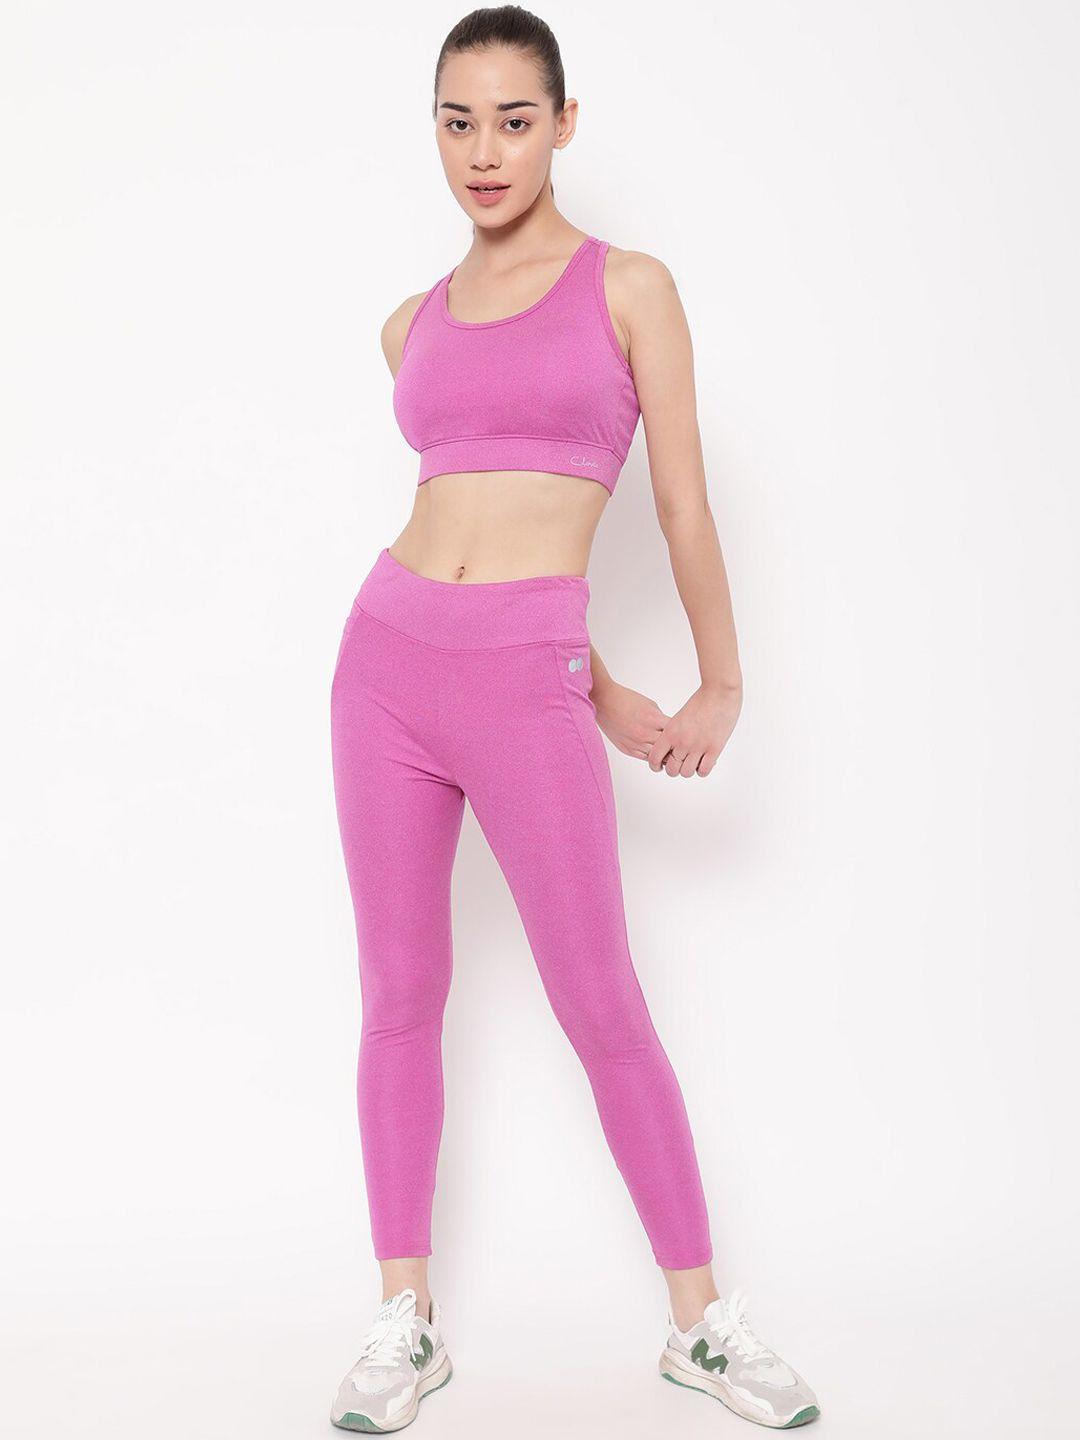 clovia pink sports bra & high-rise tights tracksuits